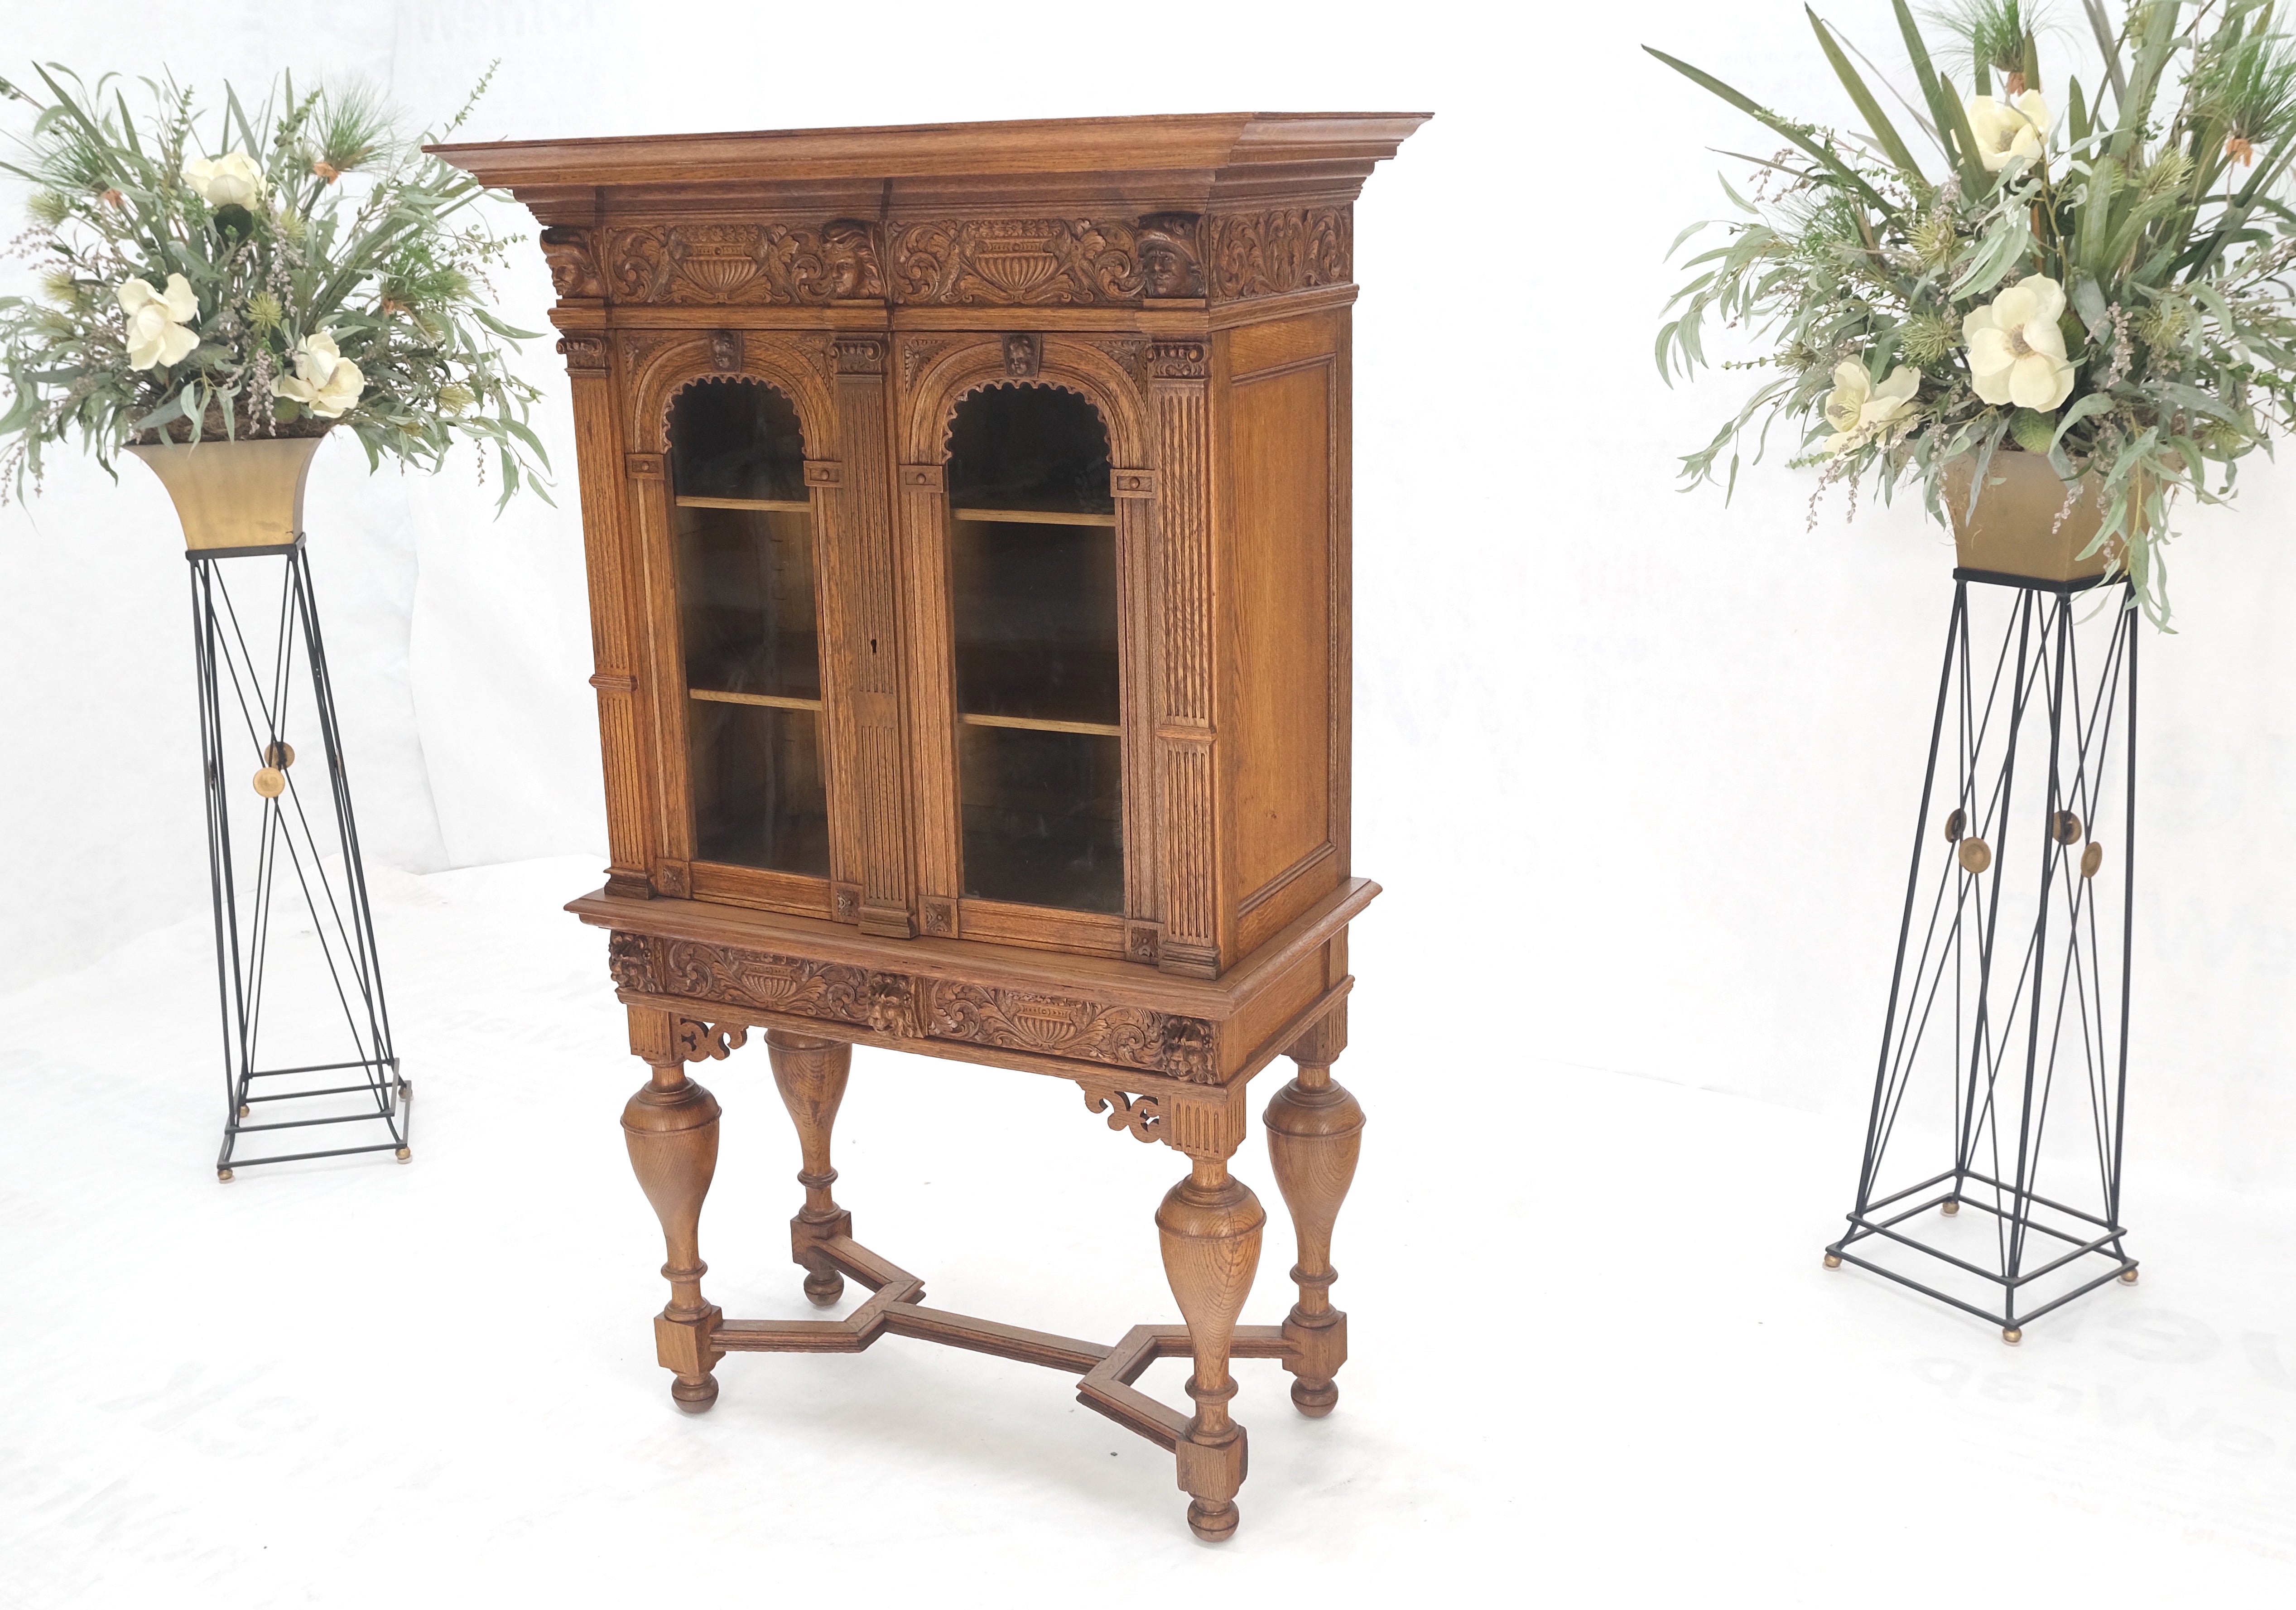 Heavily Carved Oak Faces Urns Motive Two Door China Cabinet c1880s MINT!
Adjustable shelves